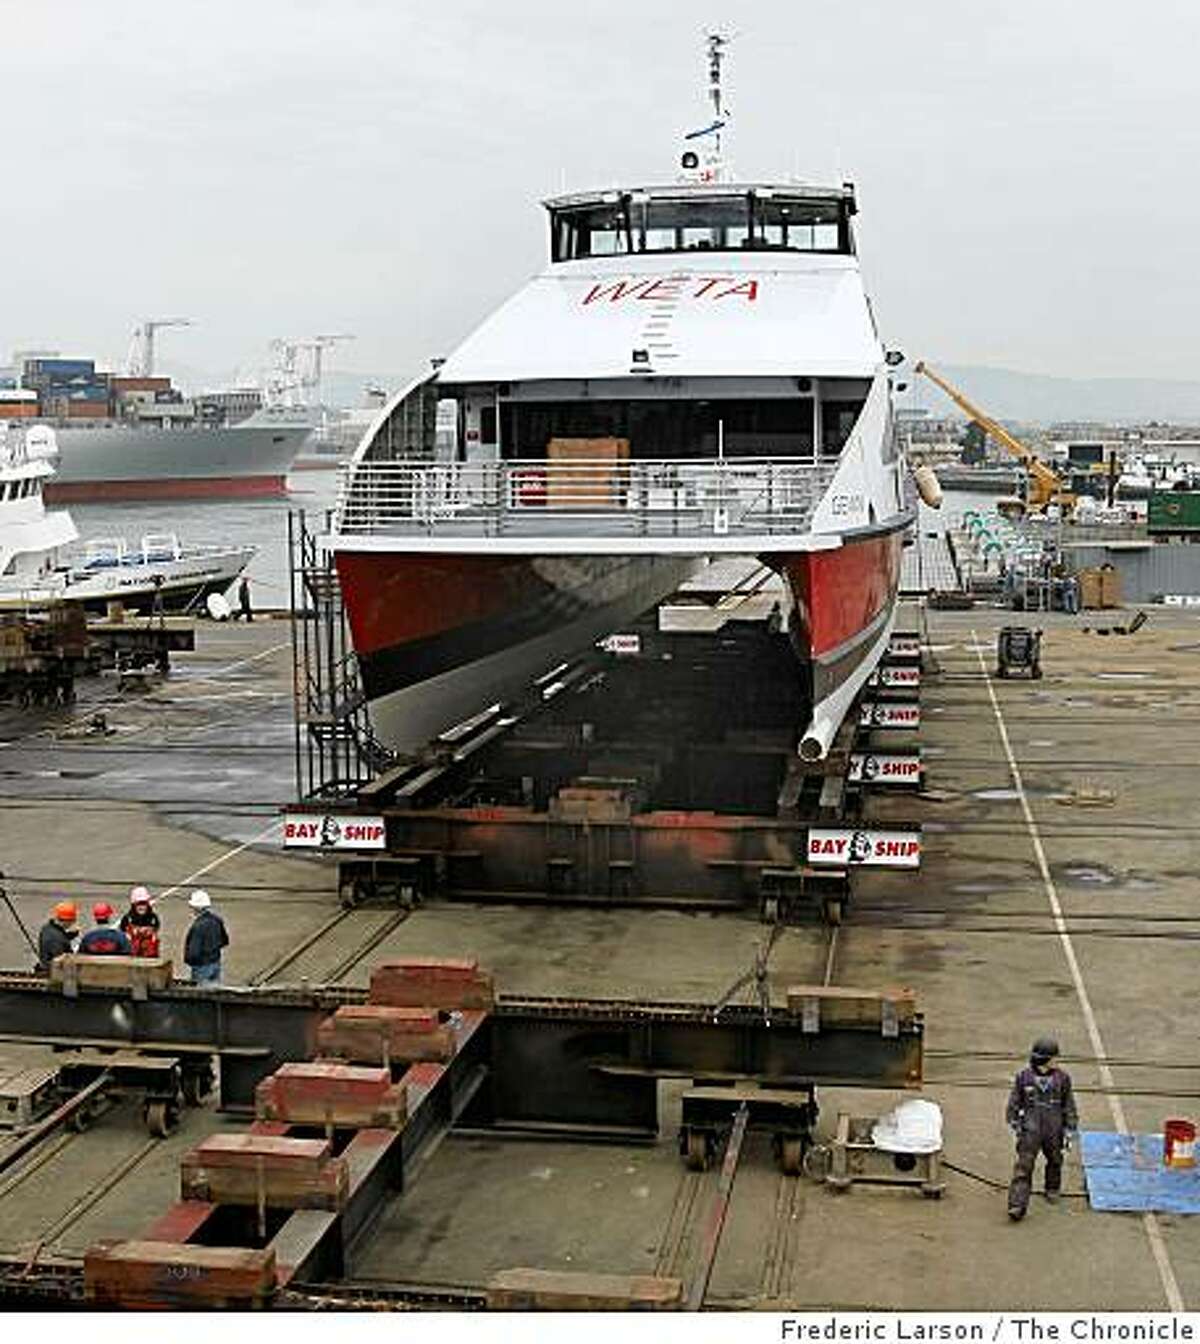 A brand new ferry named Gemeni built for the San Francisco Oakland-Alameda run arrived on November 25, 2008 at a Alameda dry dock.